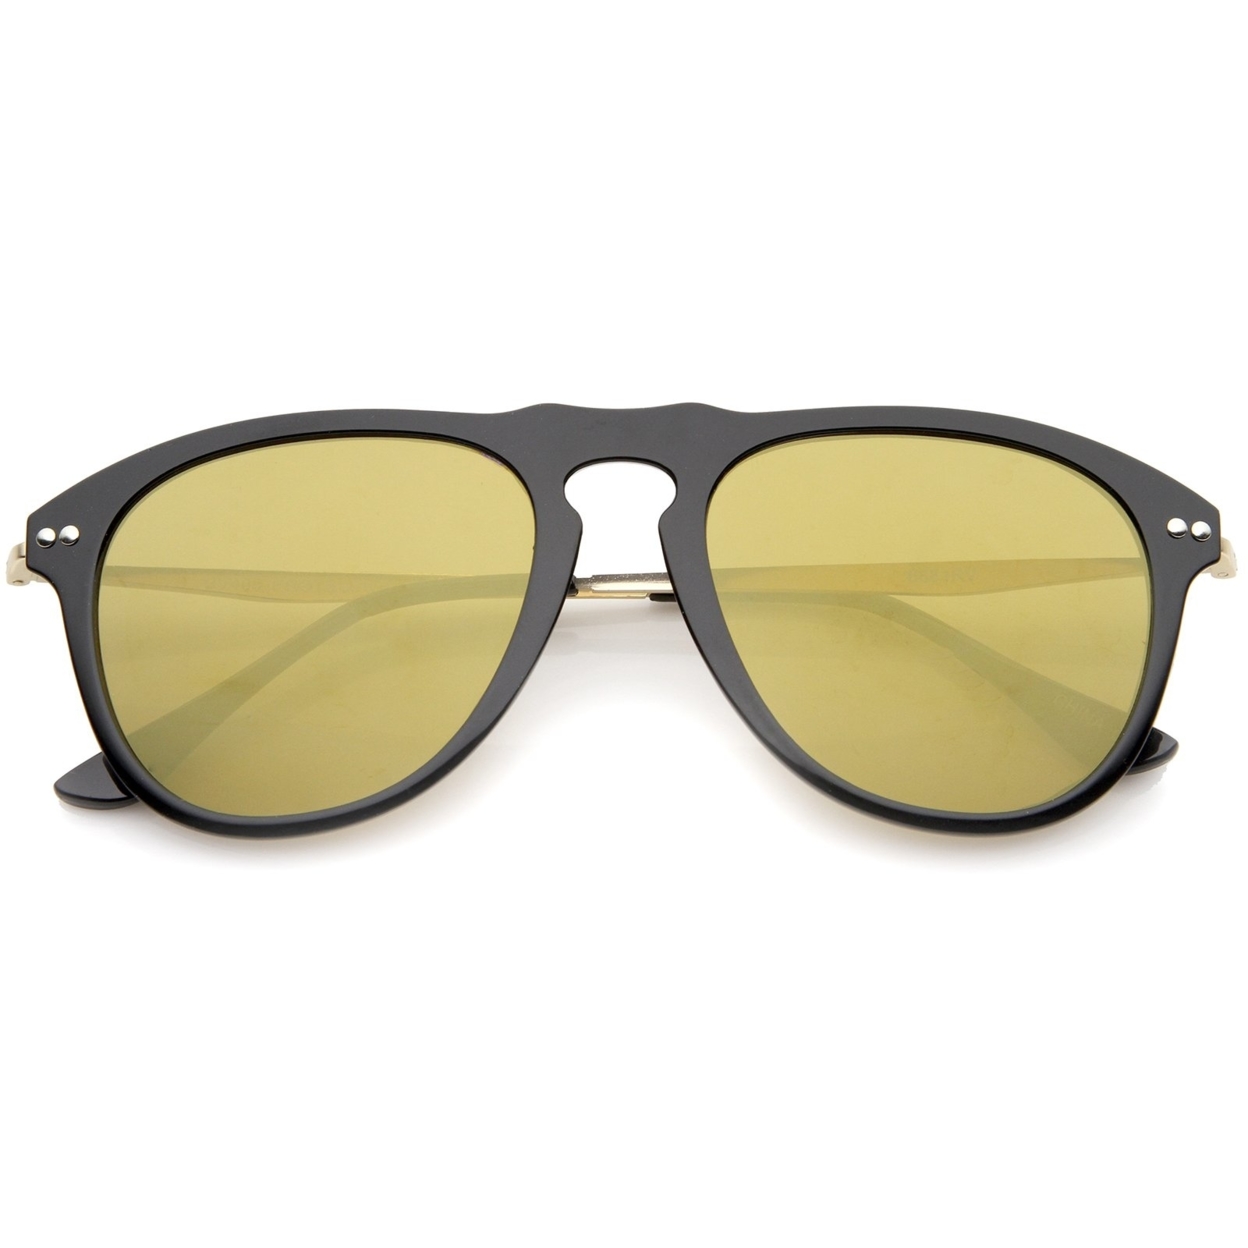 Modern Keyhole Bridge Horn Rimmed Colored Mirror Lens Aviator Sunglasses 53mm - Black-Gold / Blue Mirror